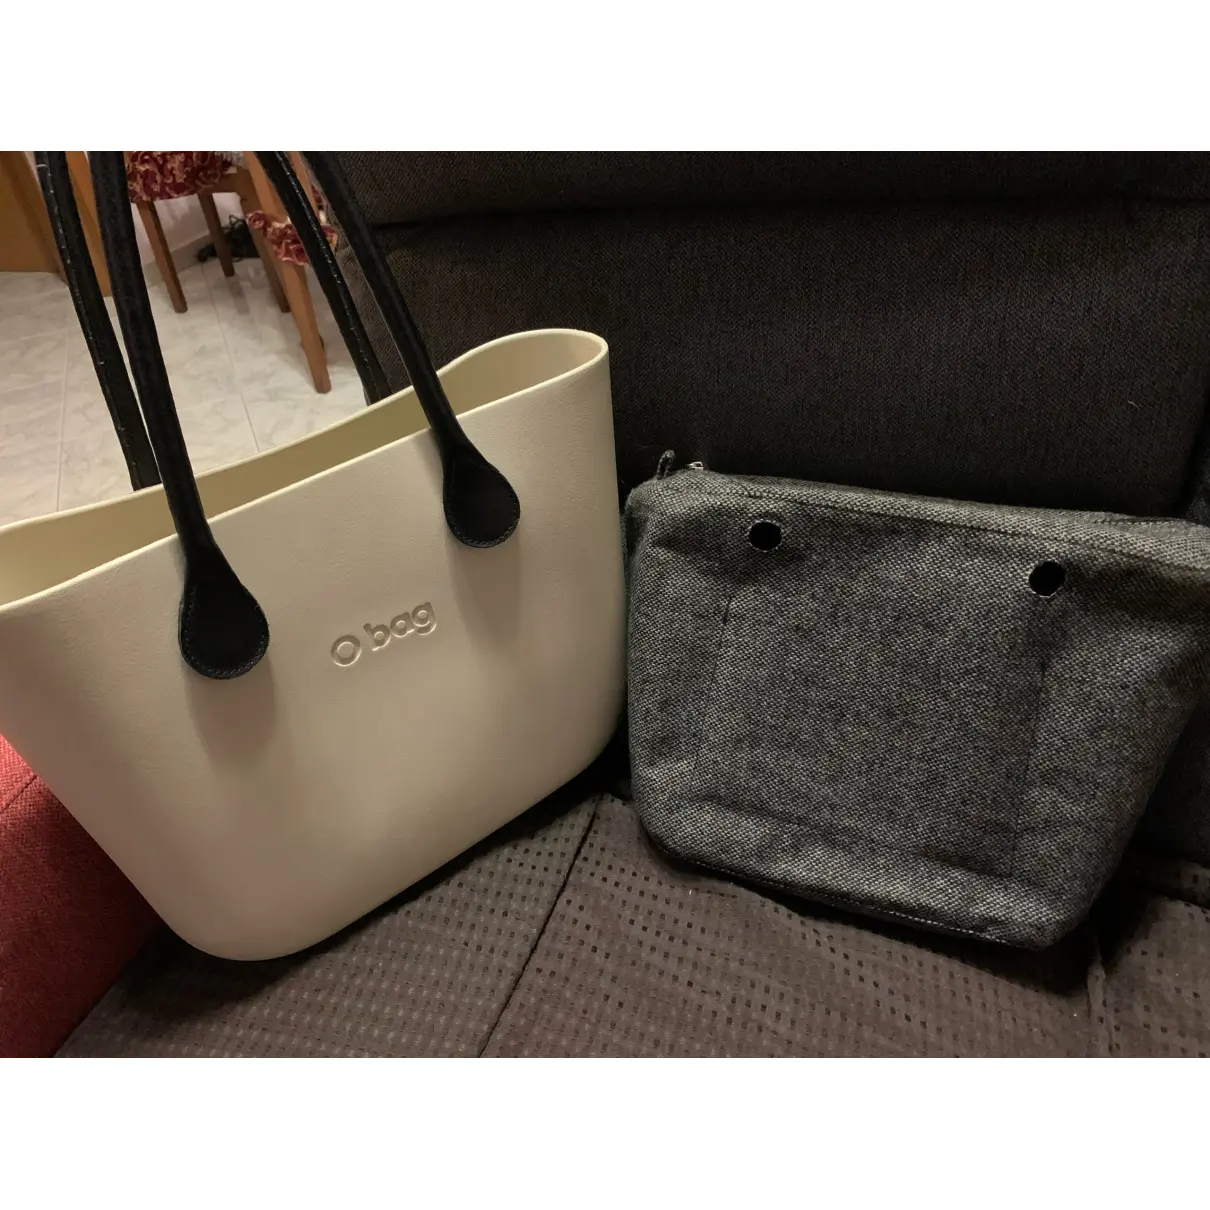 Buy O bag Leather handbag online